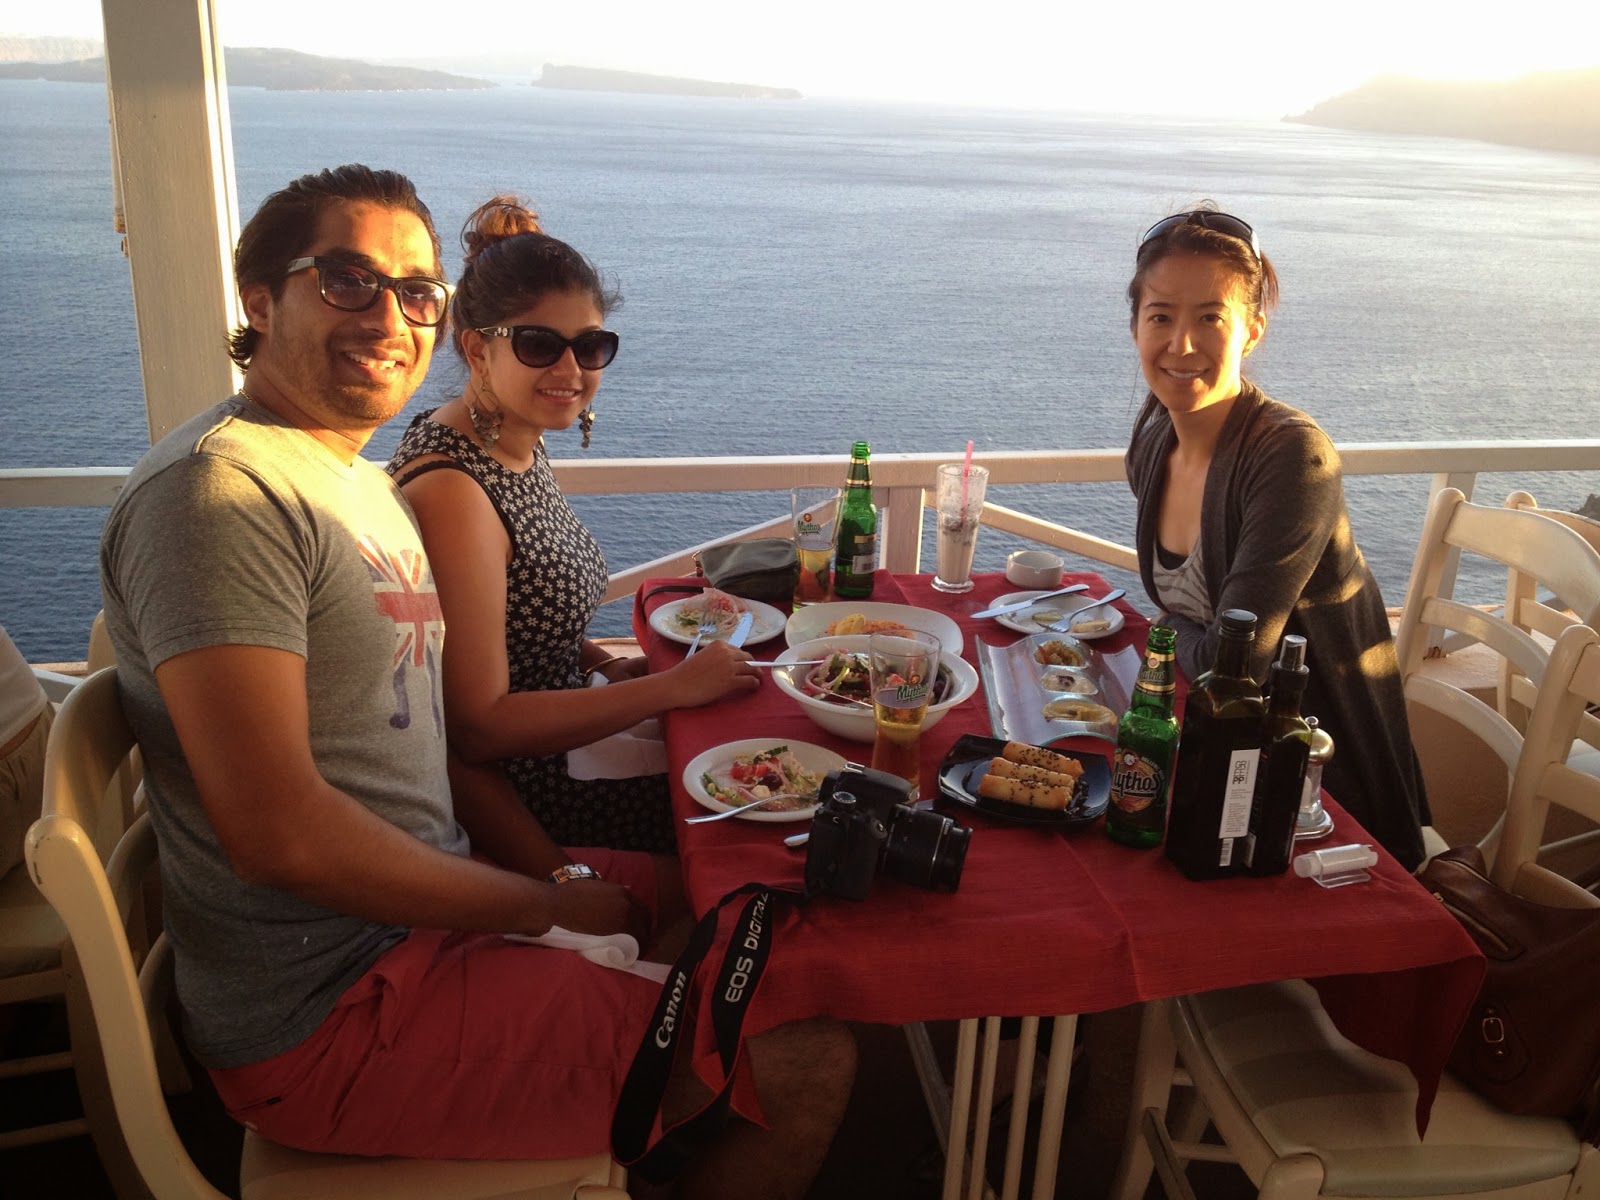 Santorini - Dinner our first night in Santorini